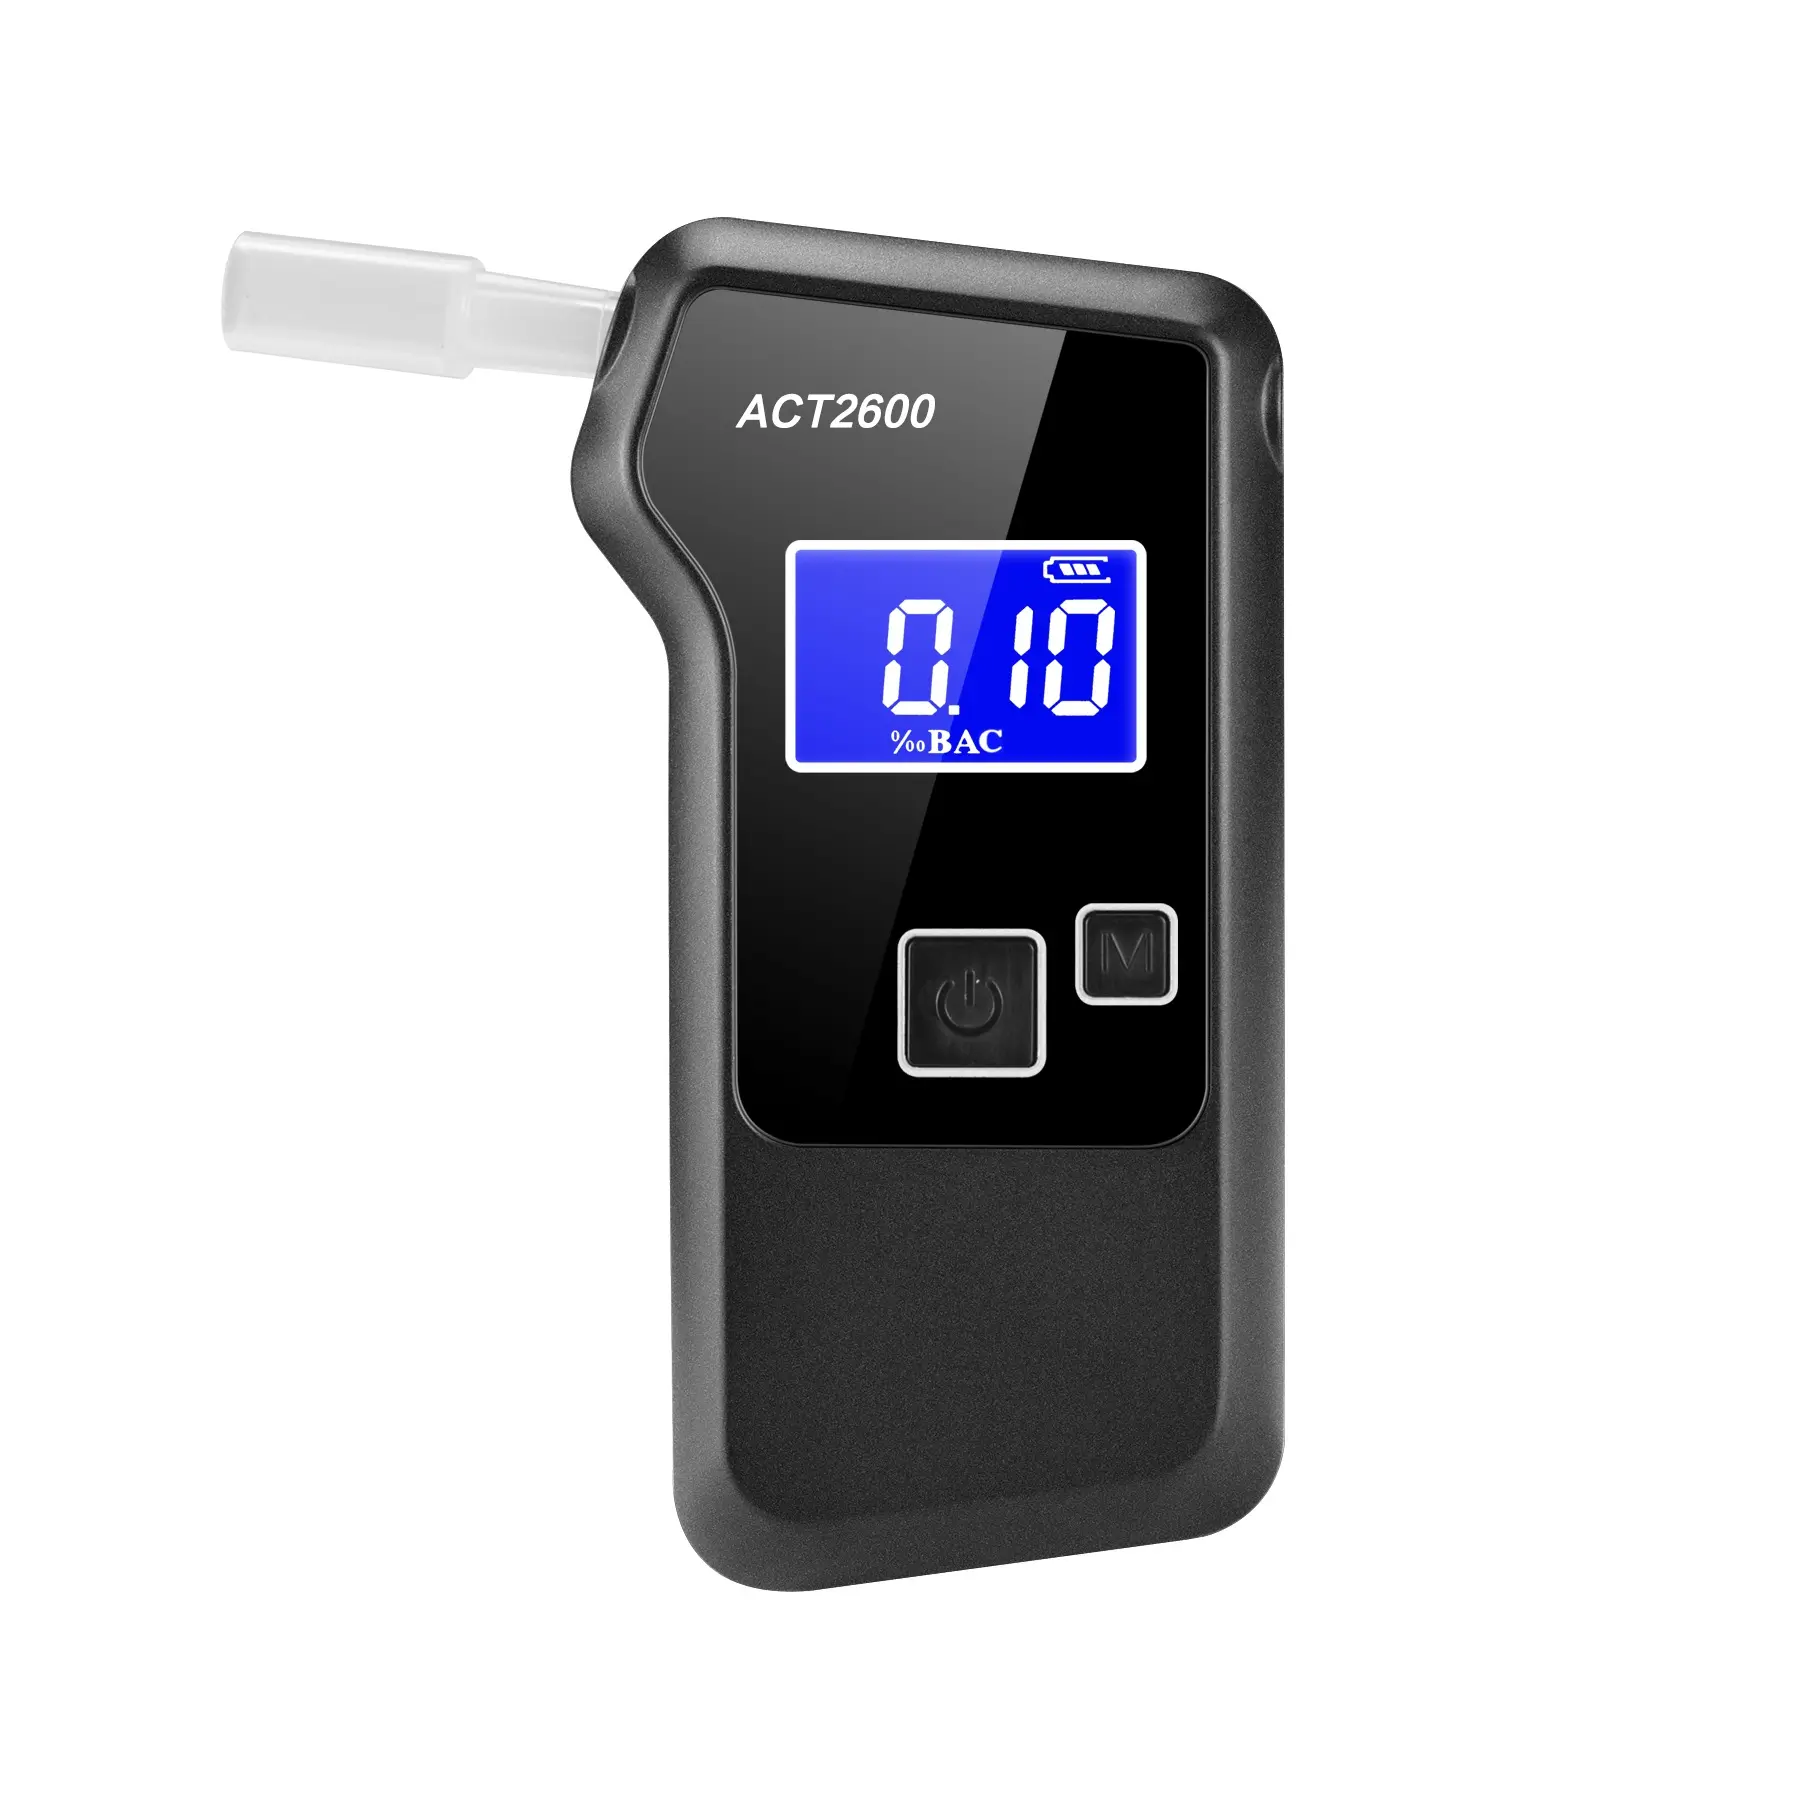 New portable digital display fuel cell alcohol breath analyzer